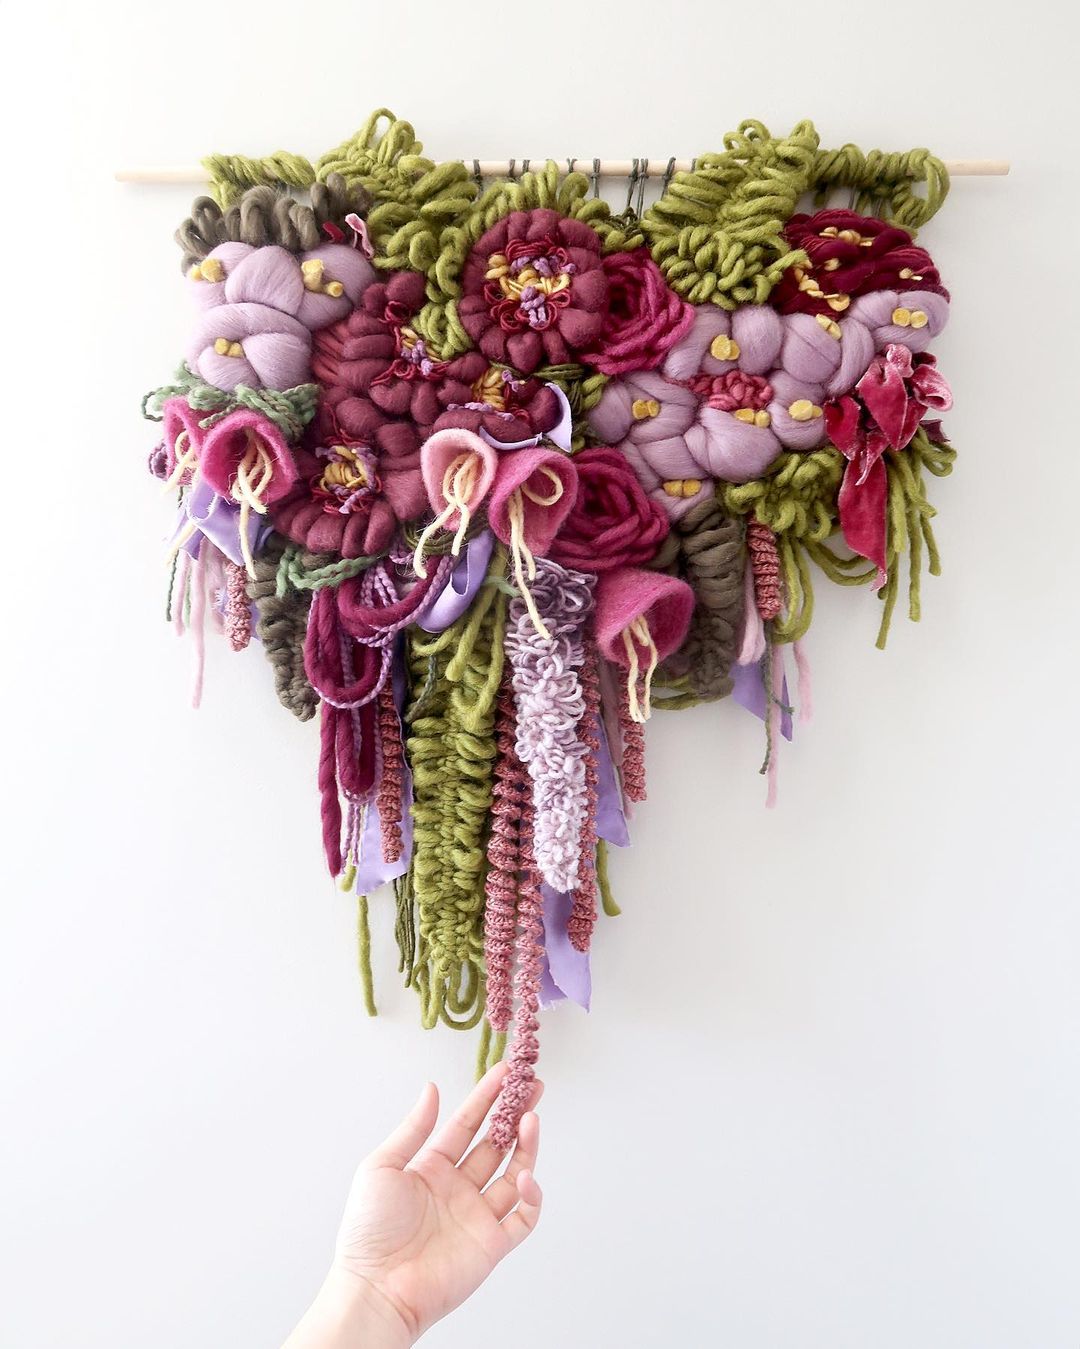 Alyssa Ki Solip DIY art wall hangings weaving macrame crochet